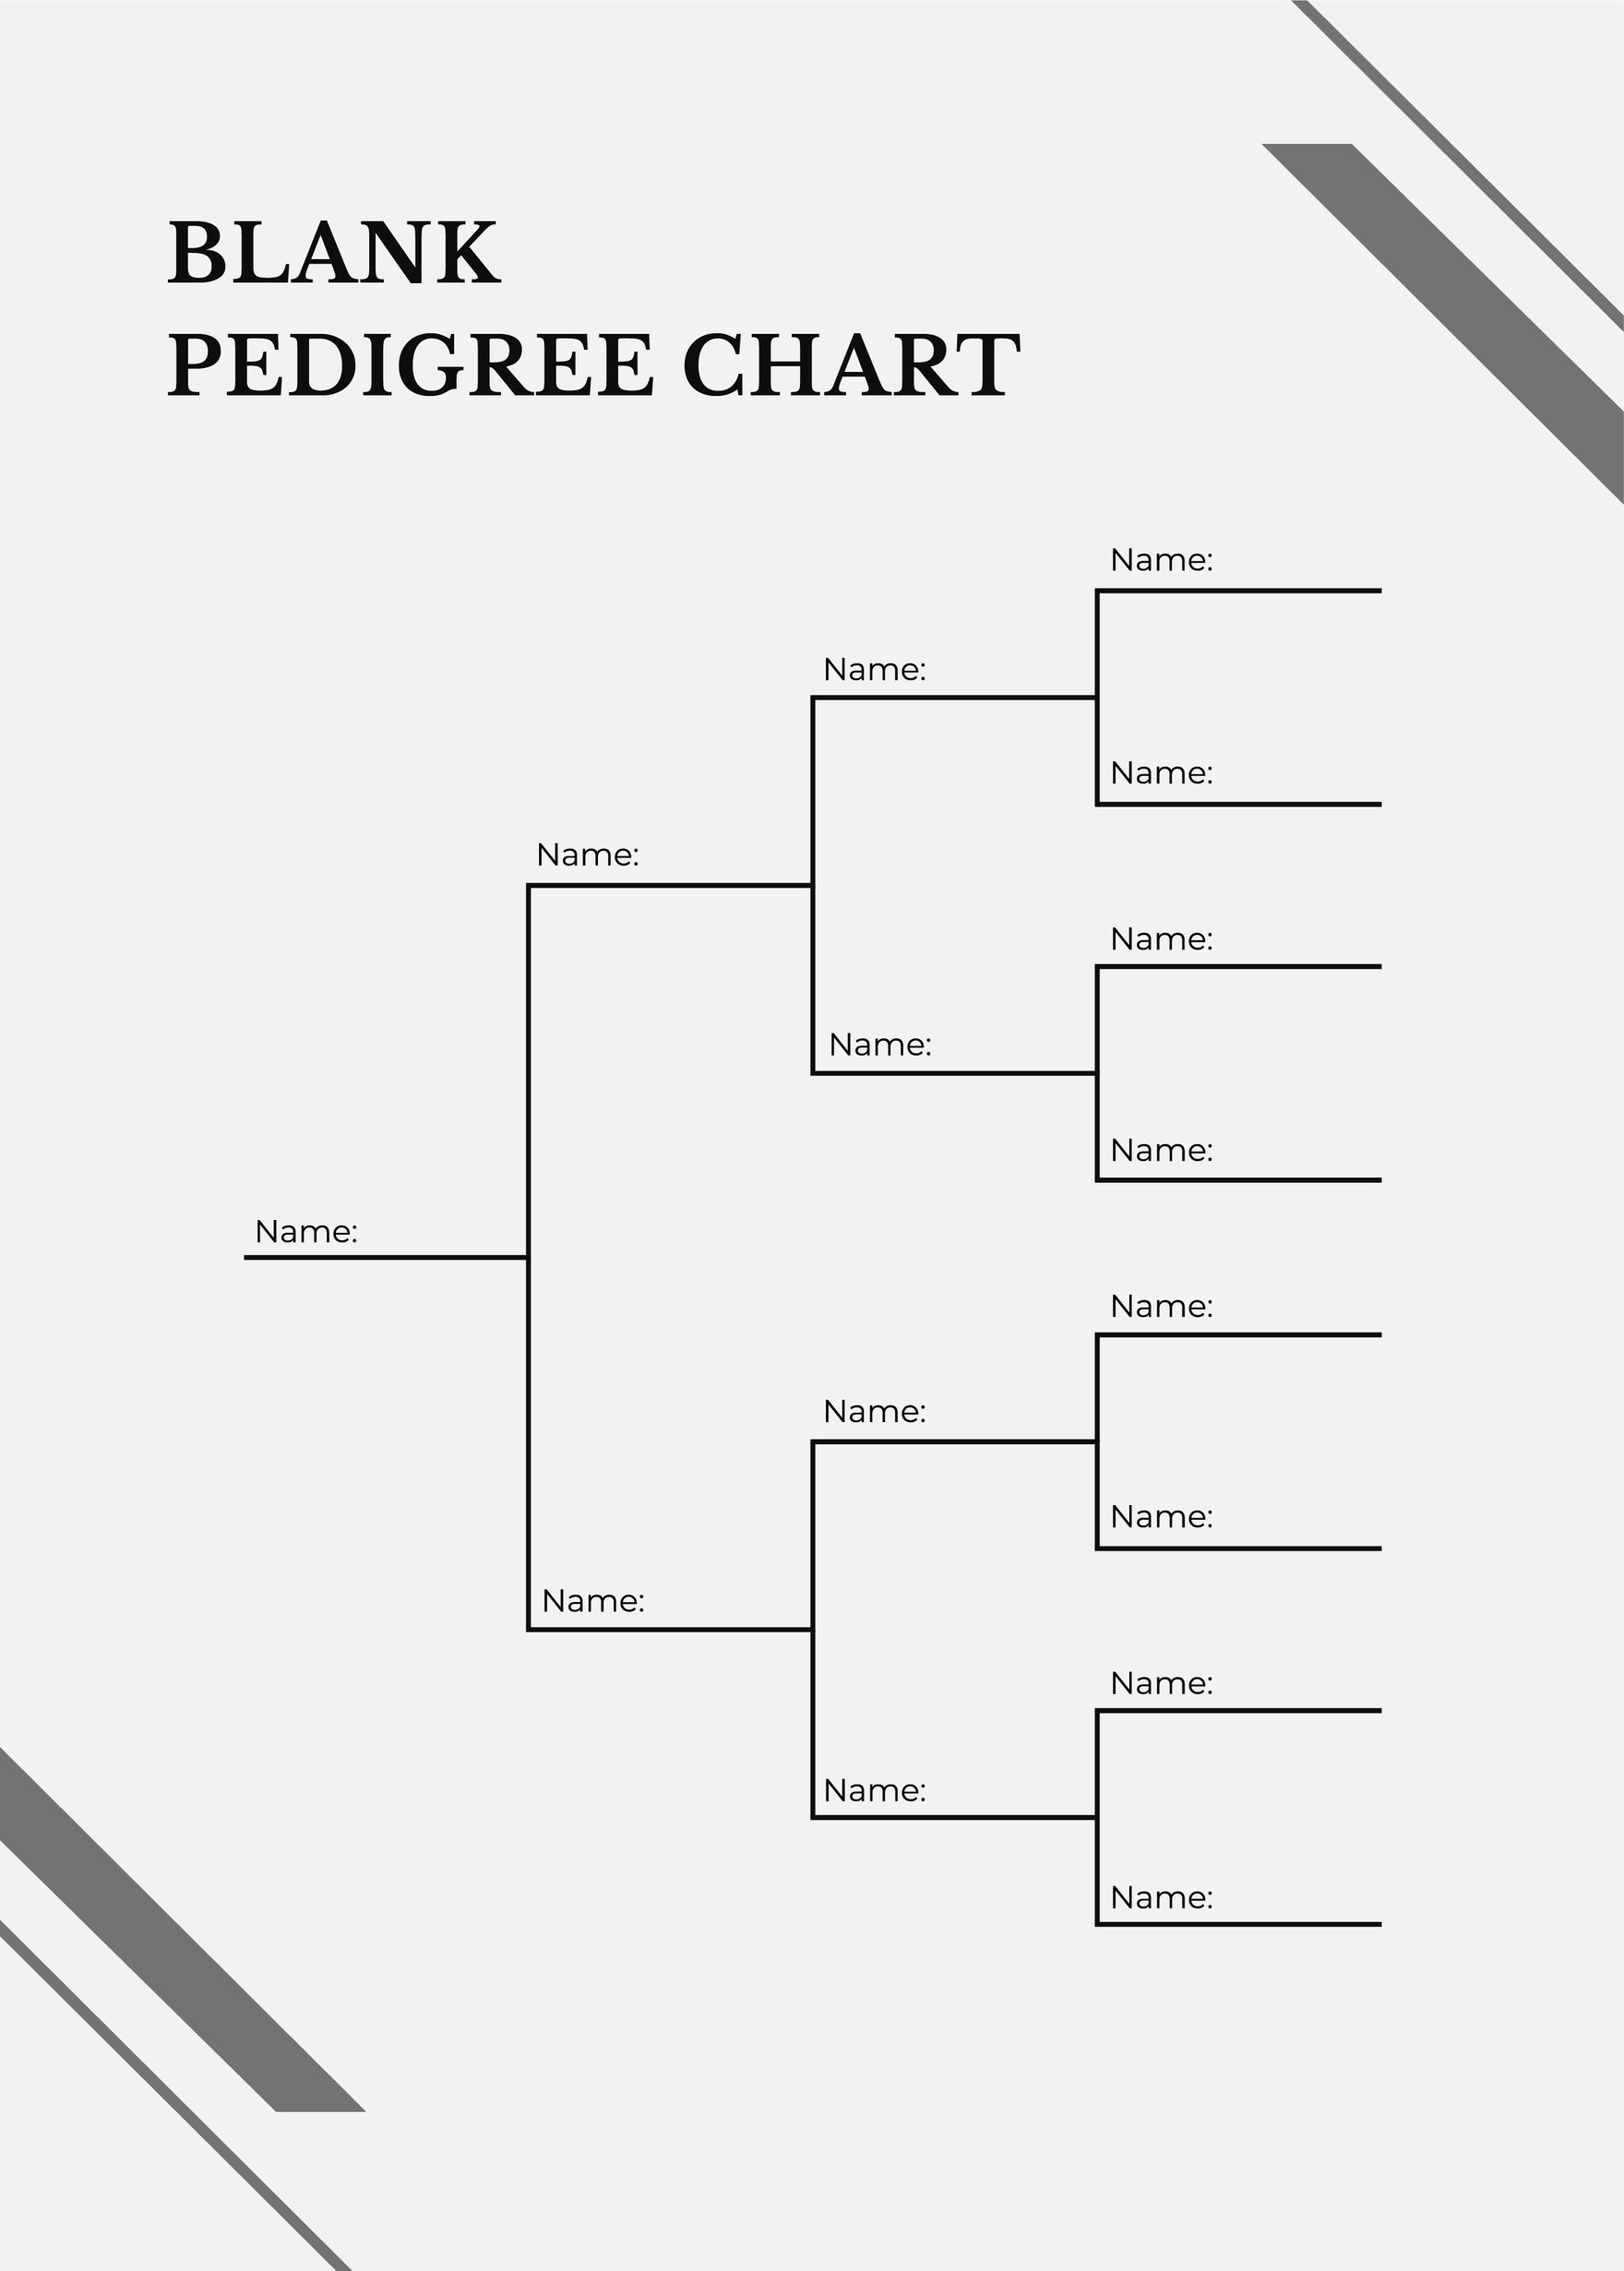 blank-pedigree-chart-in-illustrator-pdf-download-template